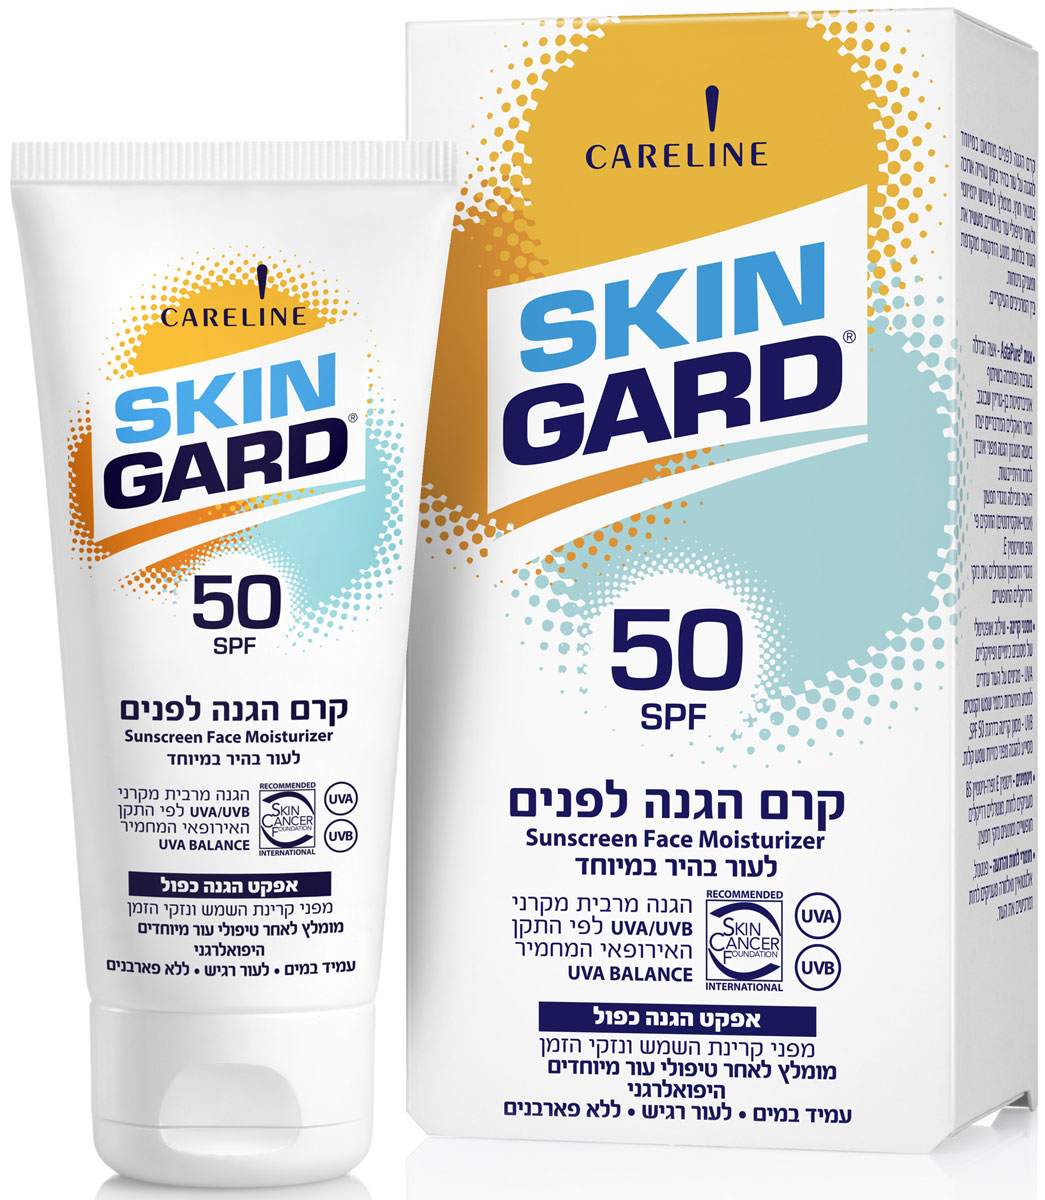 Skin Gard Cолнцезащитный крем для лица SPF 50, 60 мл